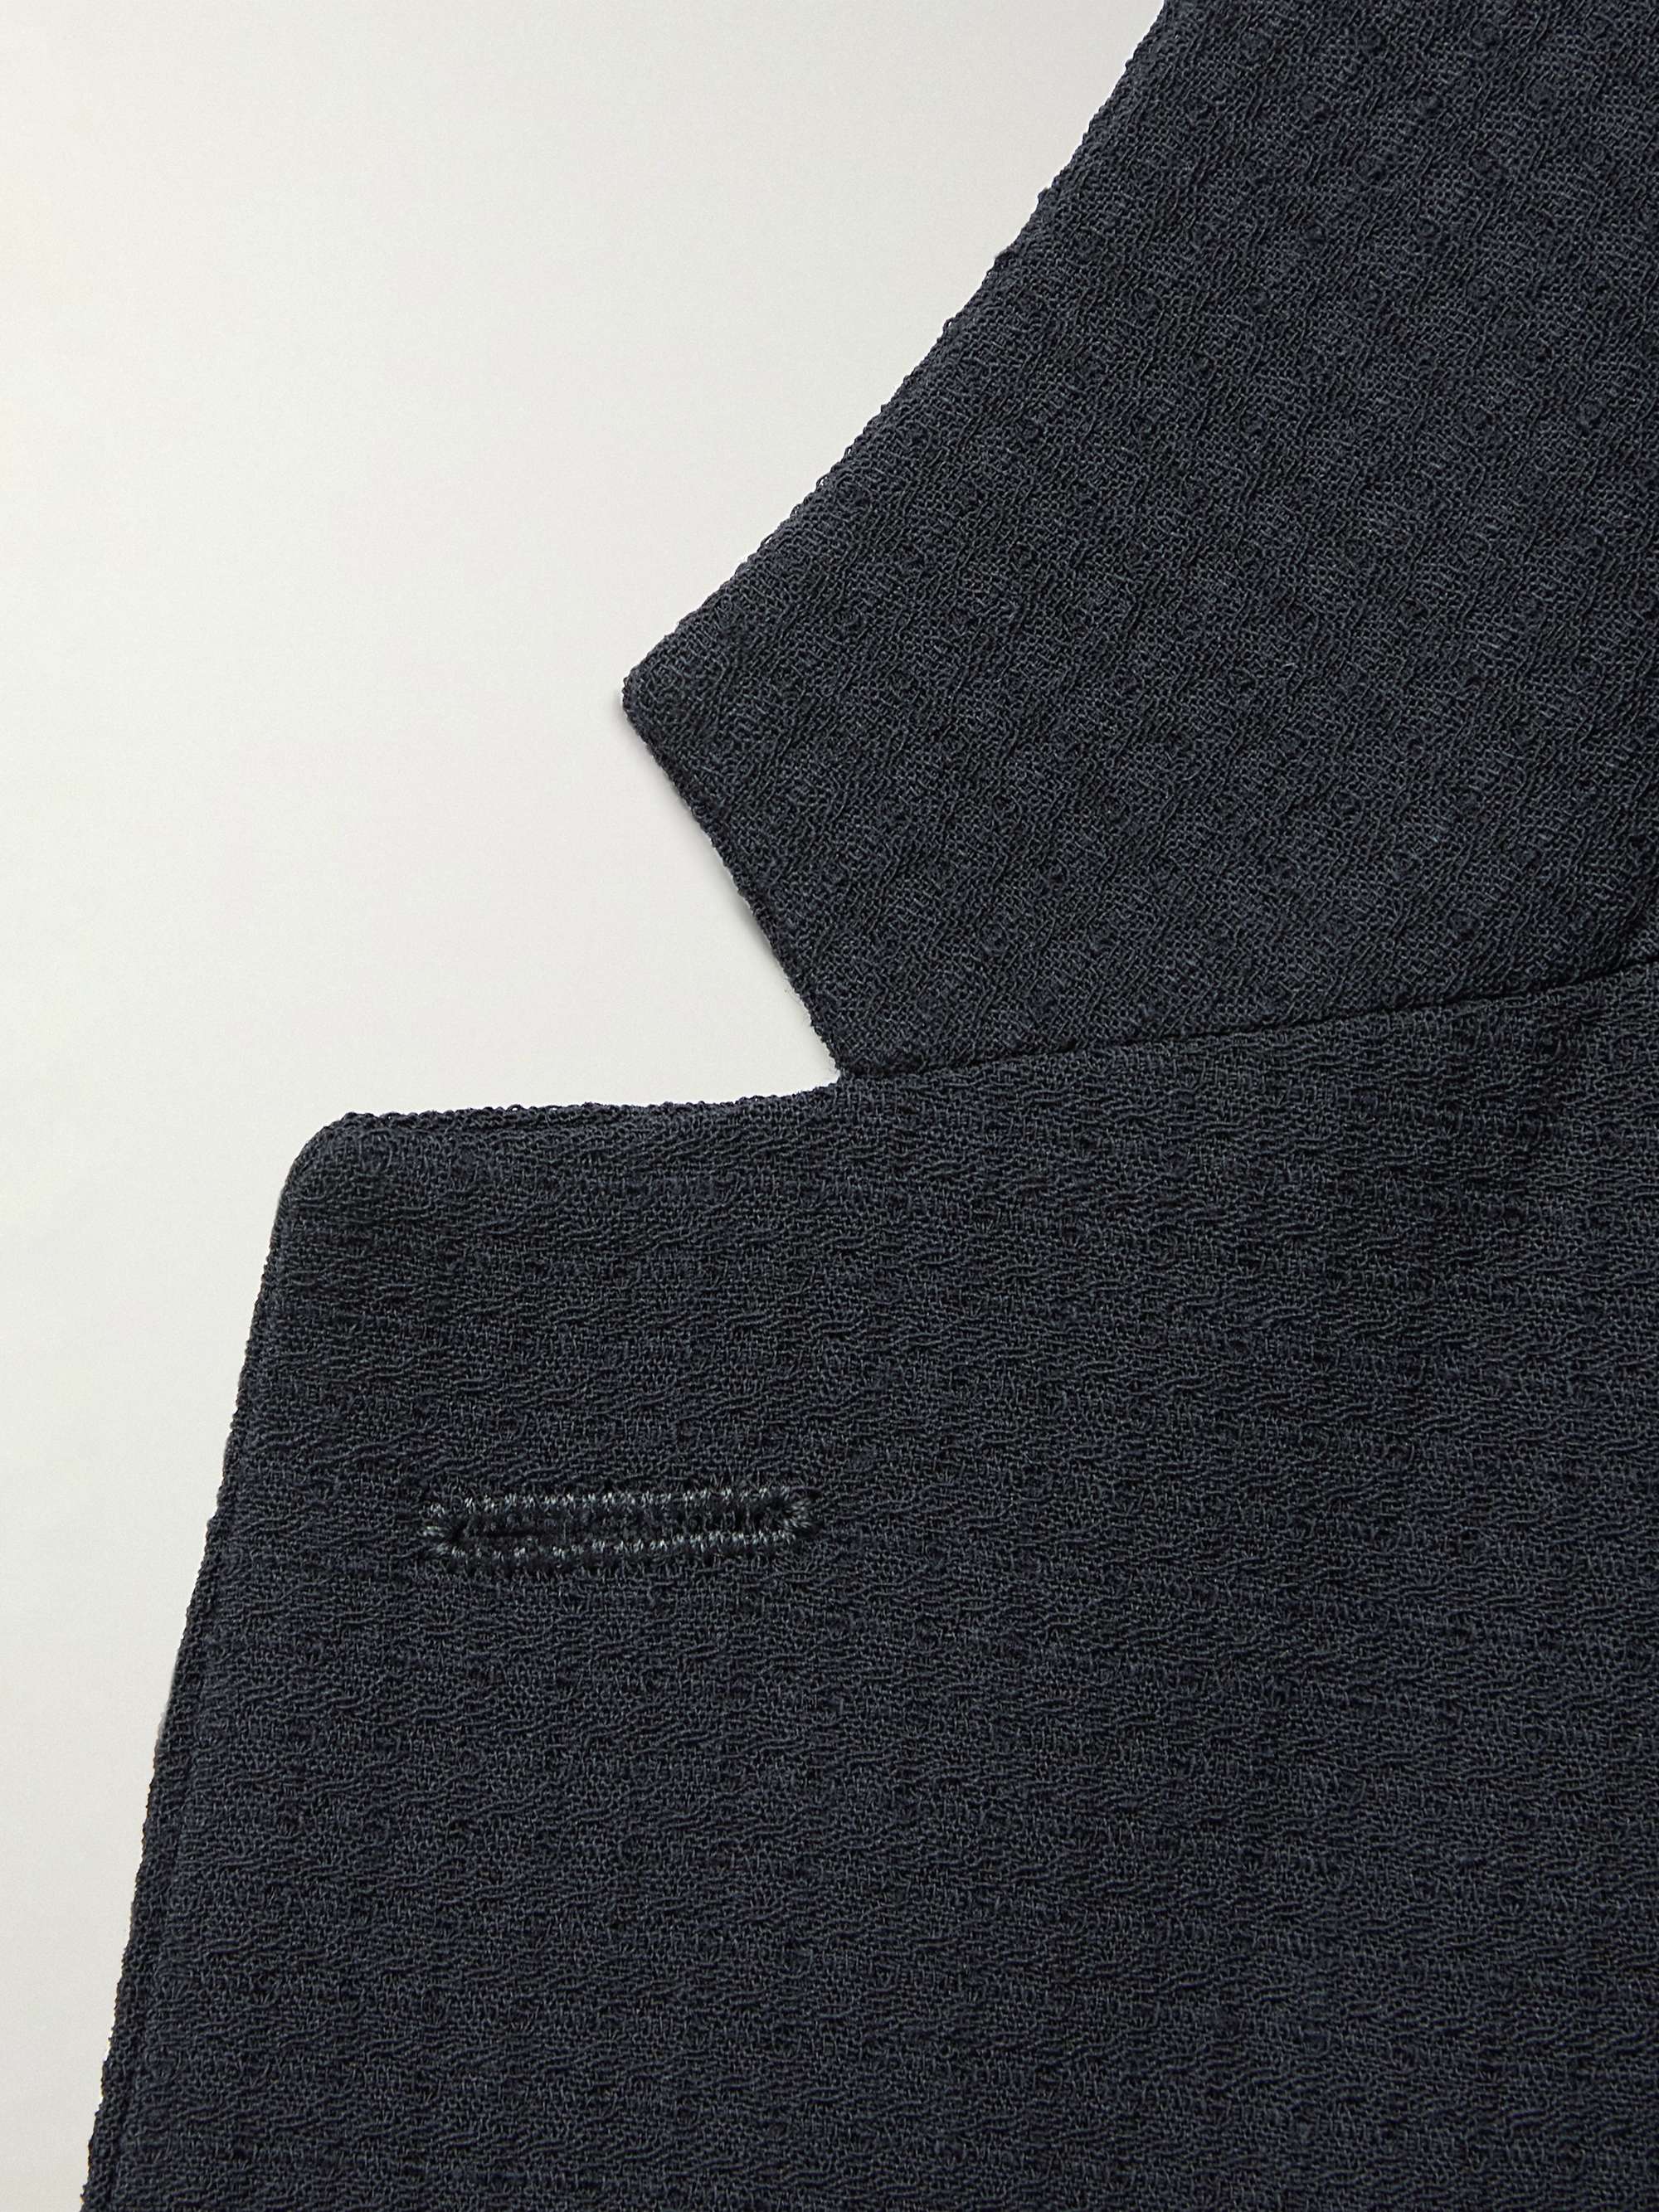 PAUL SMITH Unstructured Wool-Blend Jacquard Suit Jacket